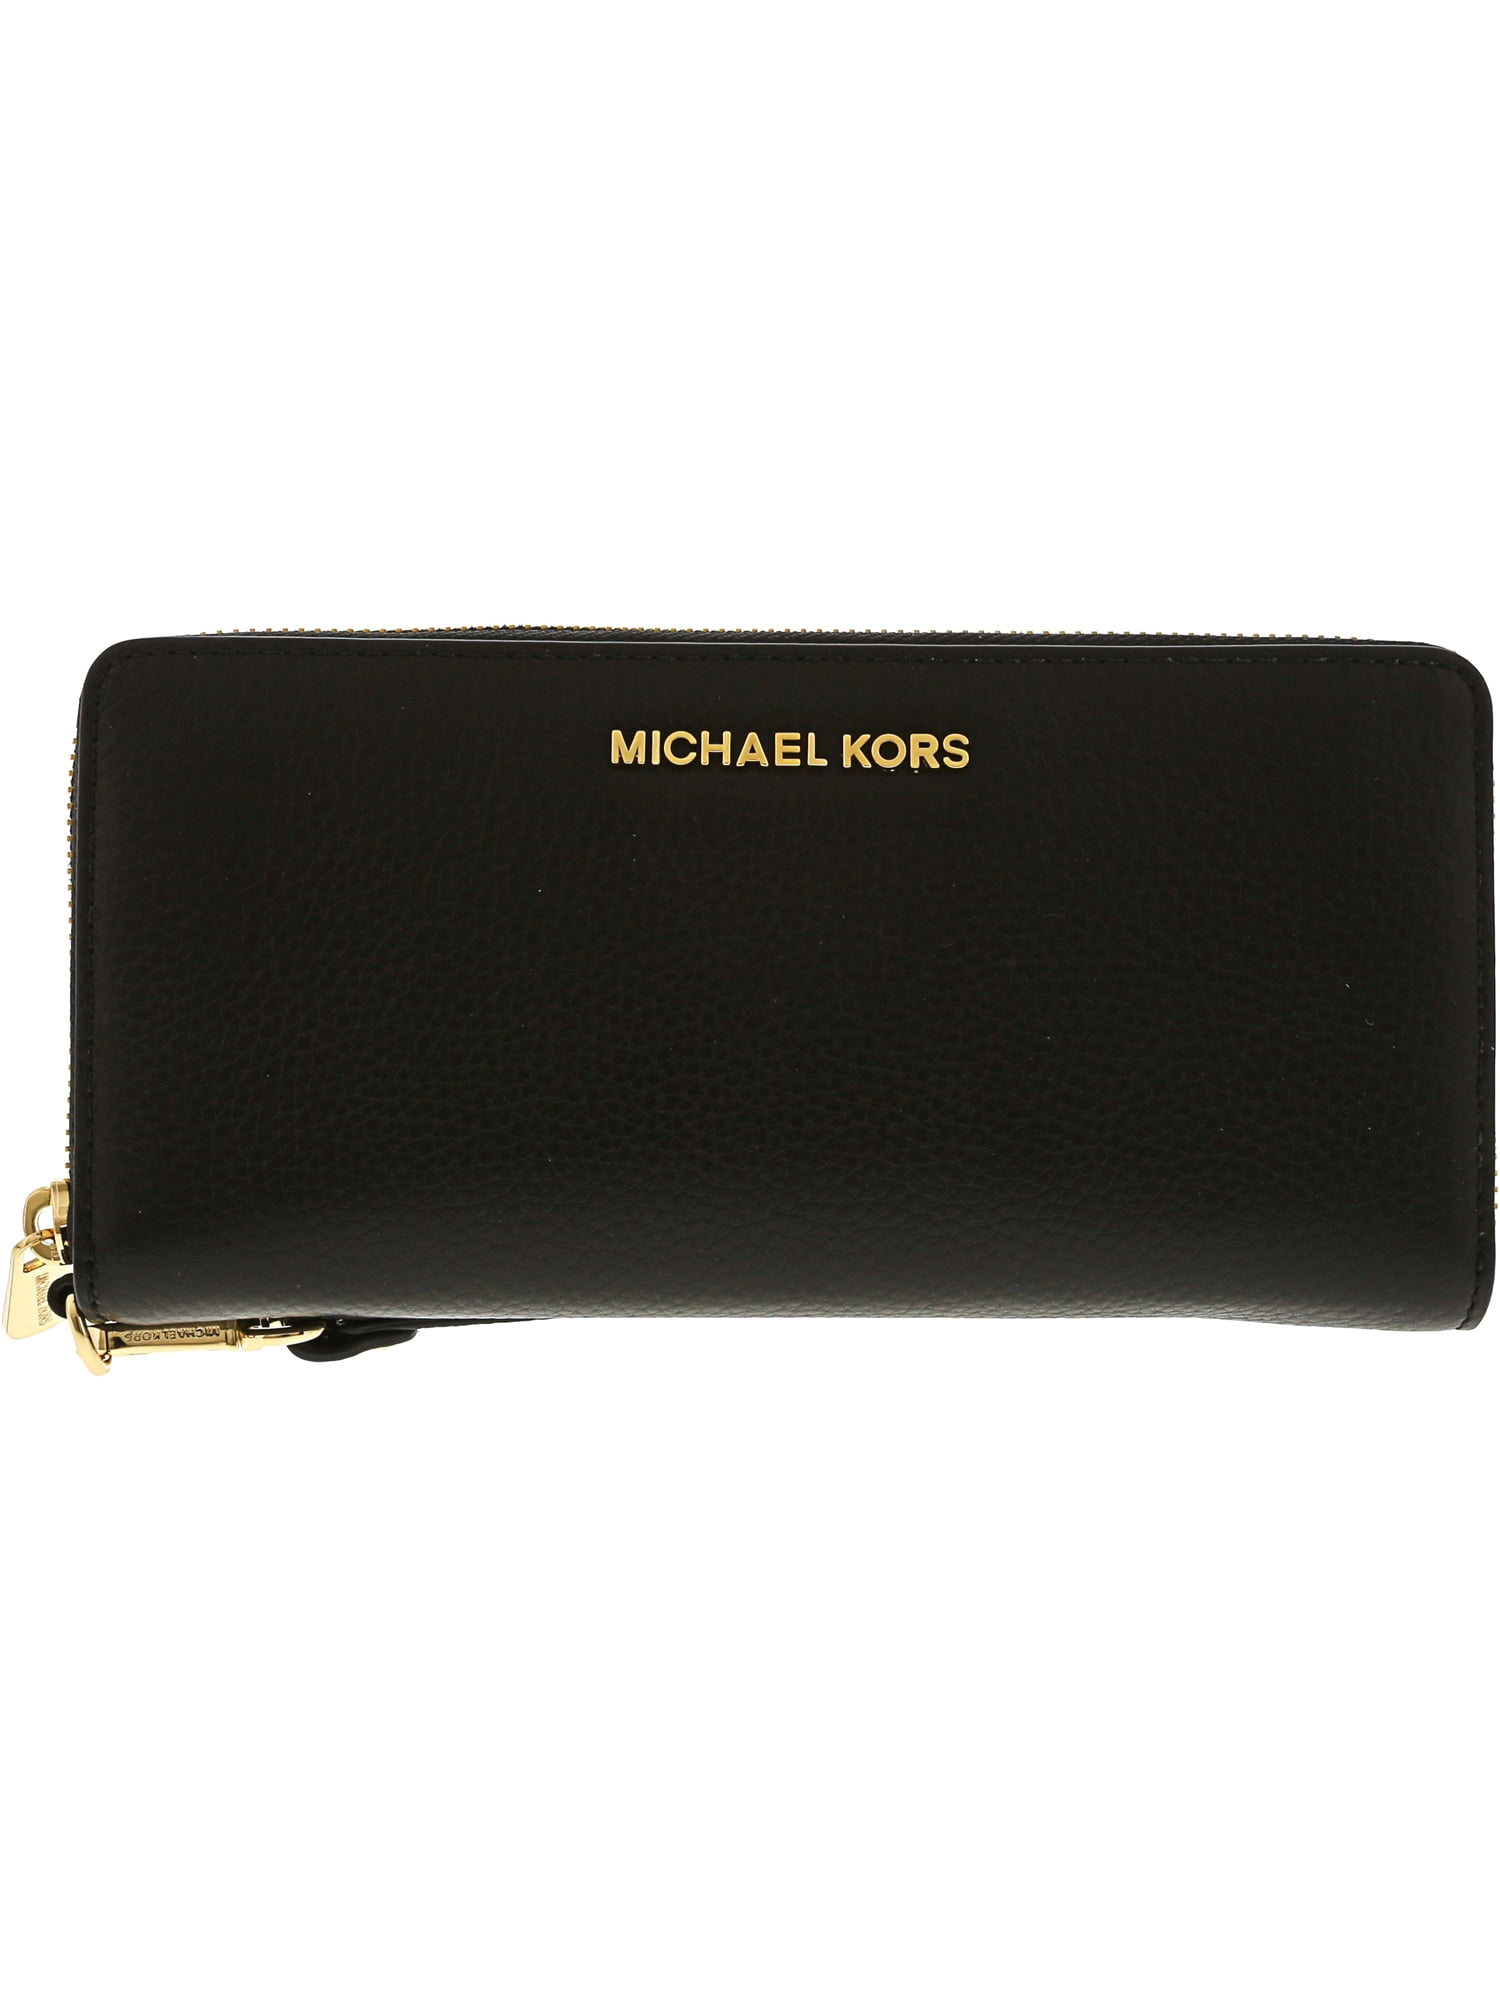 Michael Kors Jet Set Travel Large Black Pebble Leather Continental Wrist  Wallet 